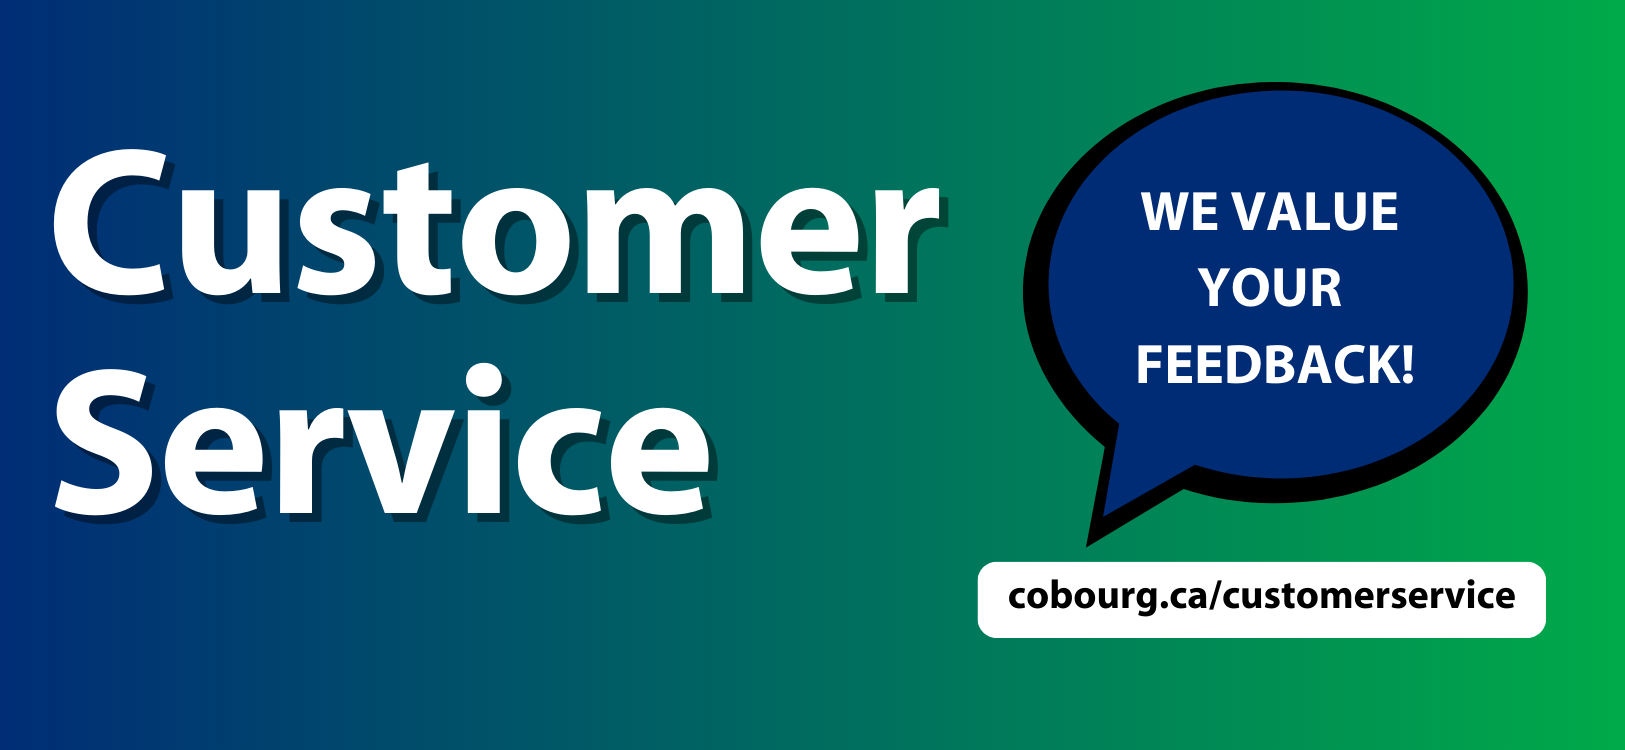 Customer Service banner image stating we value your feedback